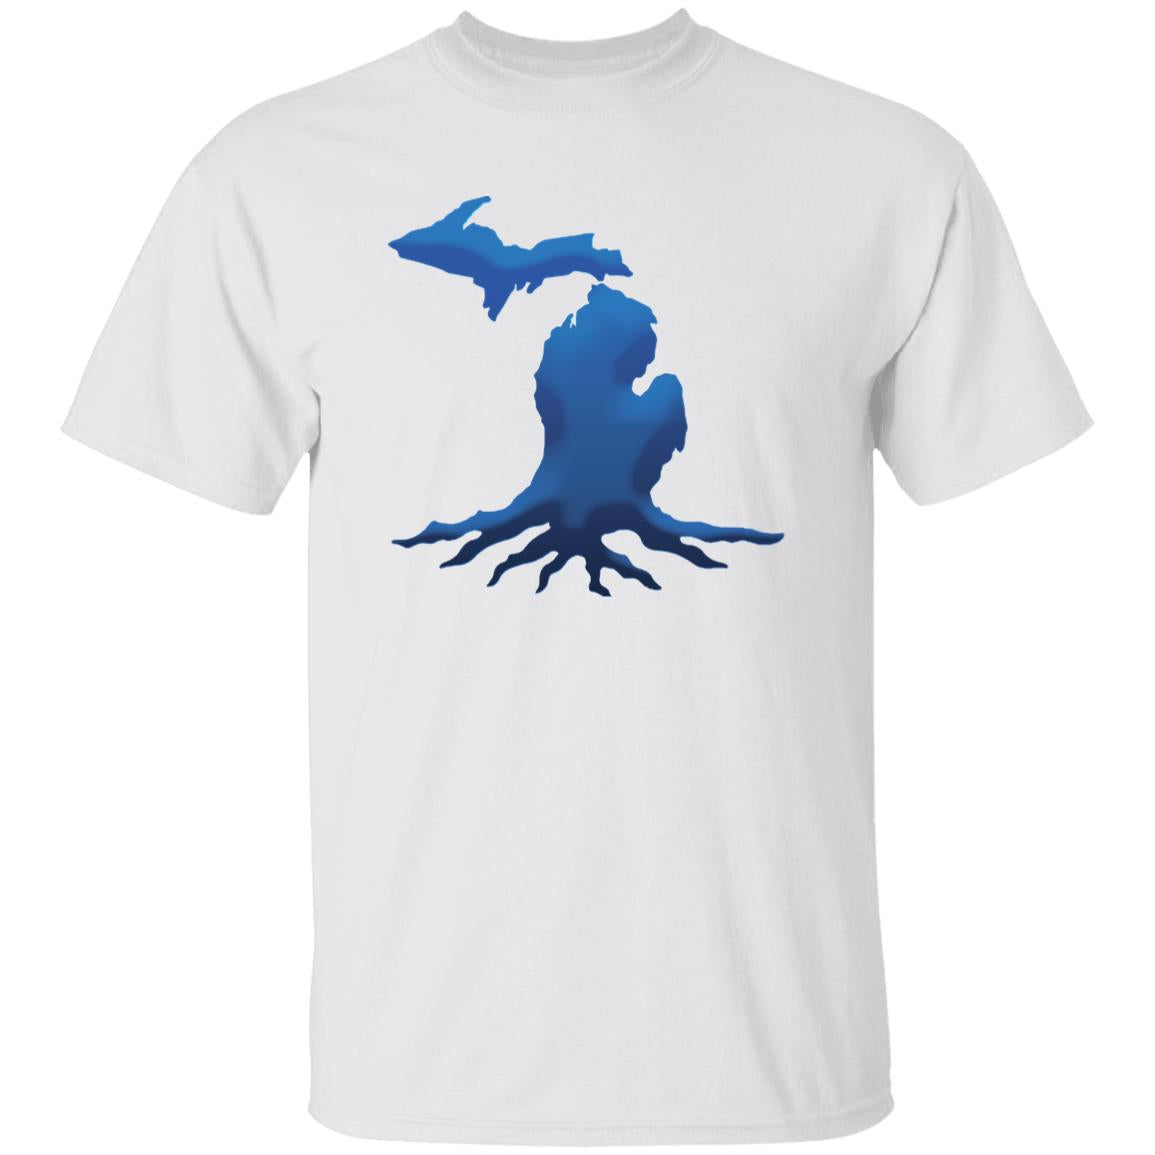 Michigan Roots Blue G500B Youth 5.3 oz 100% Cotton T-Shirt